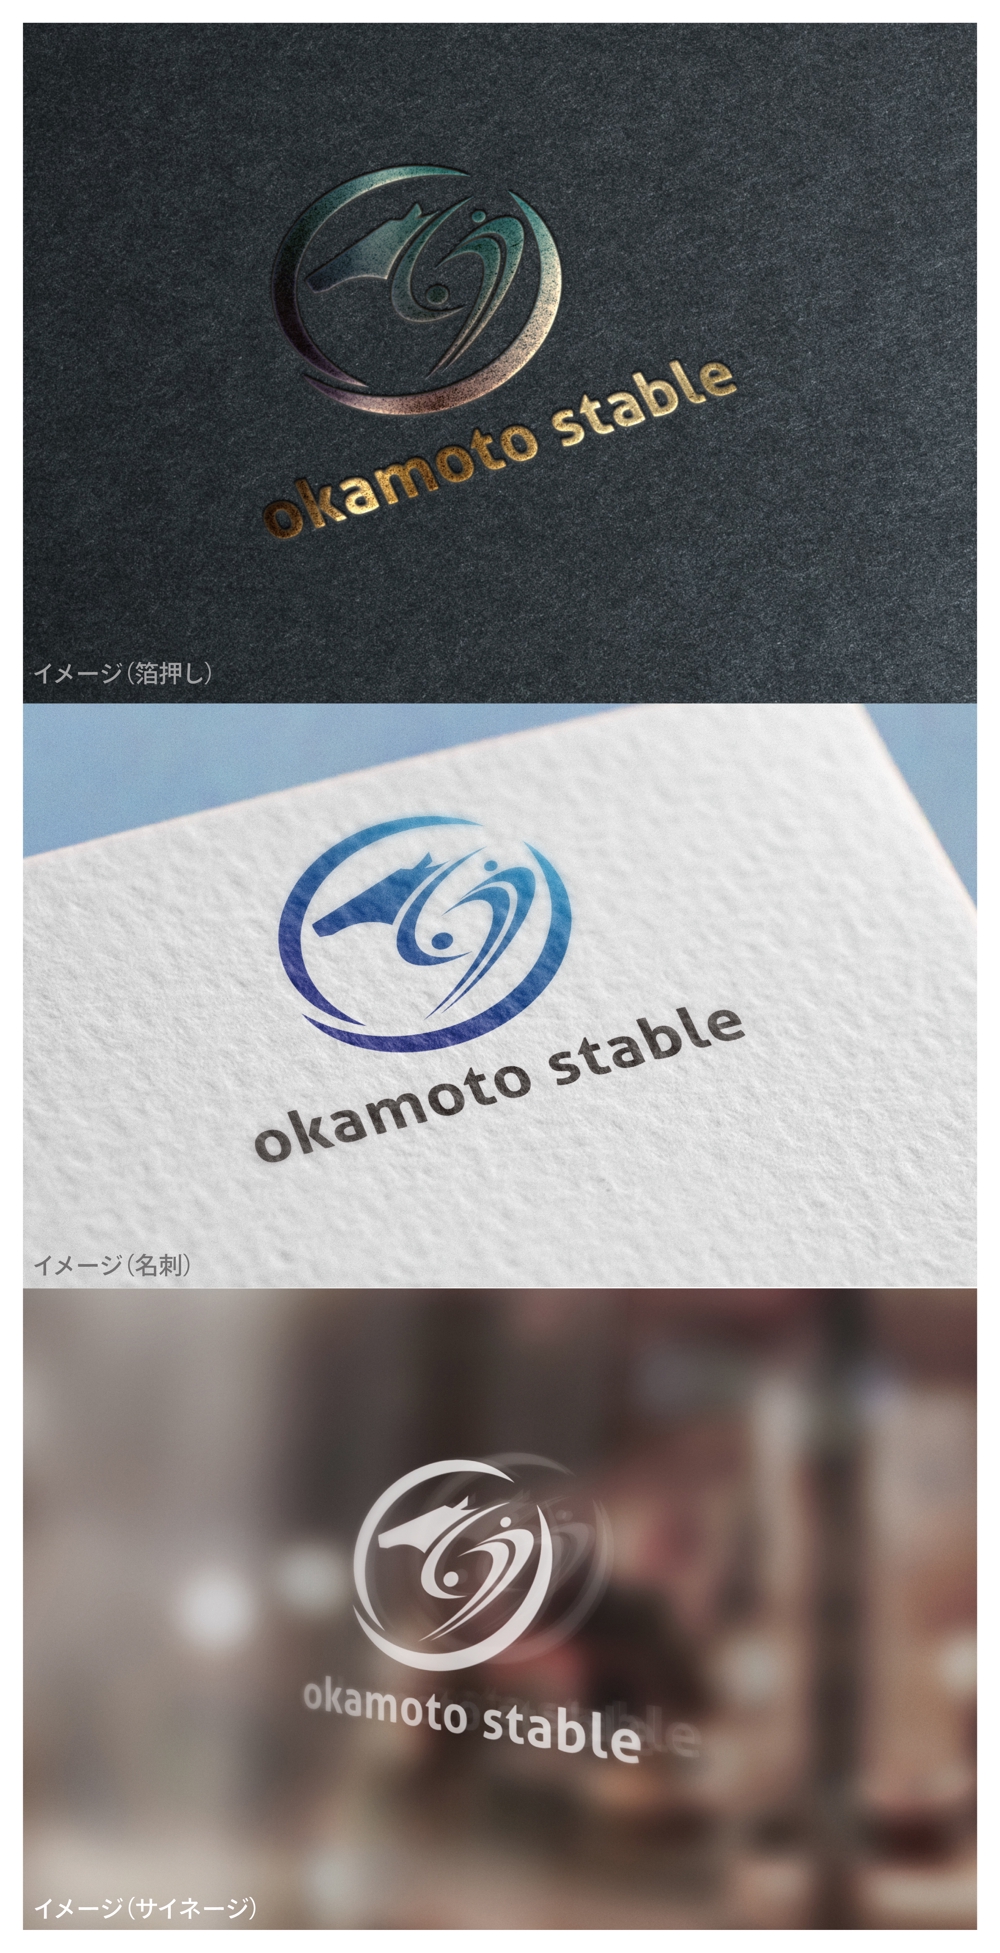 okamoto stable_logo01_01.jpg